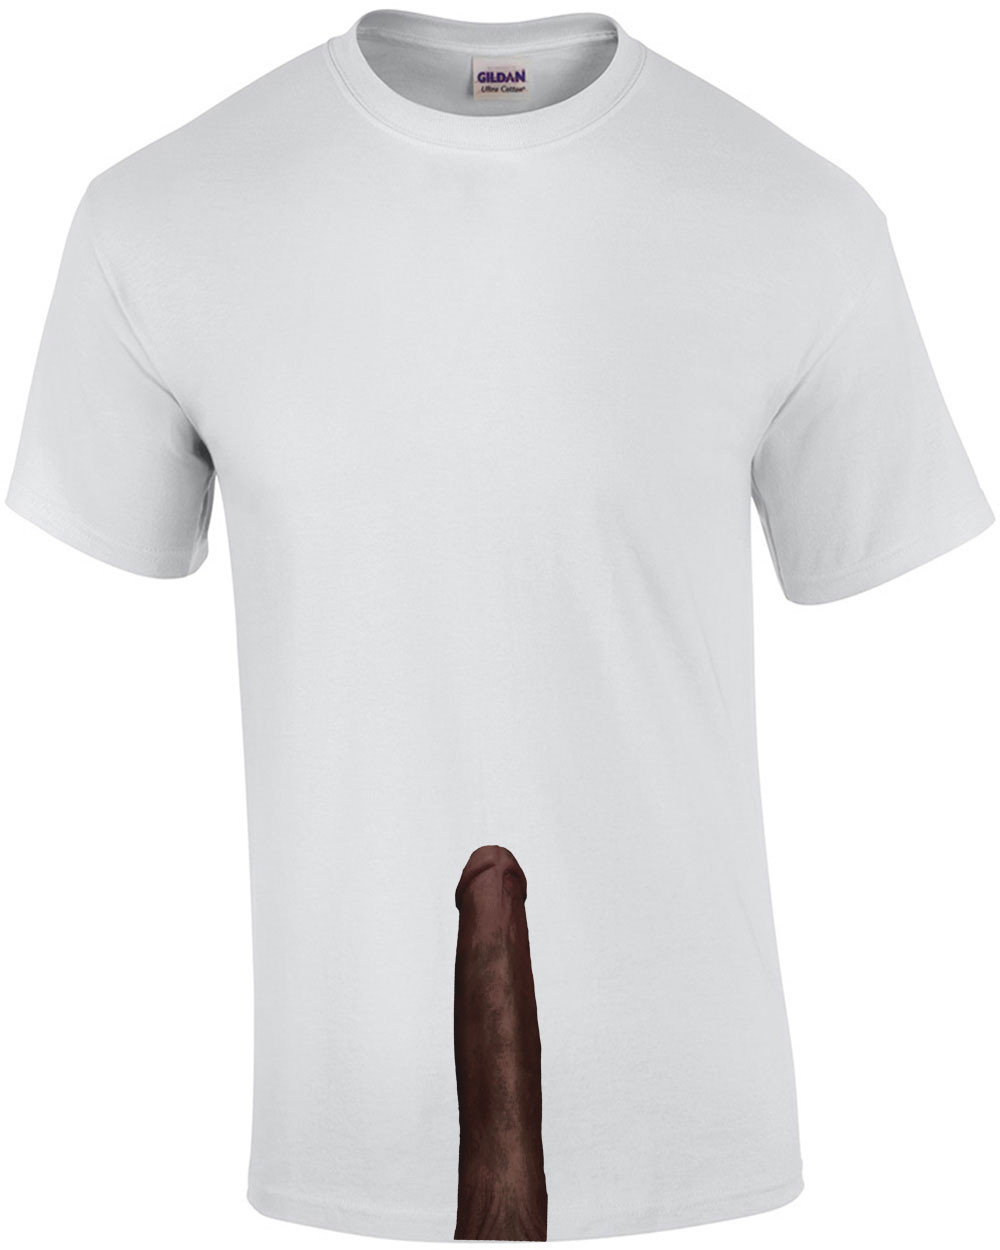 Black Penis Shirt T-shirt